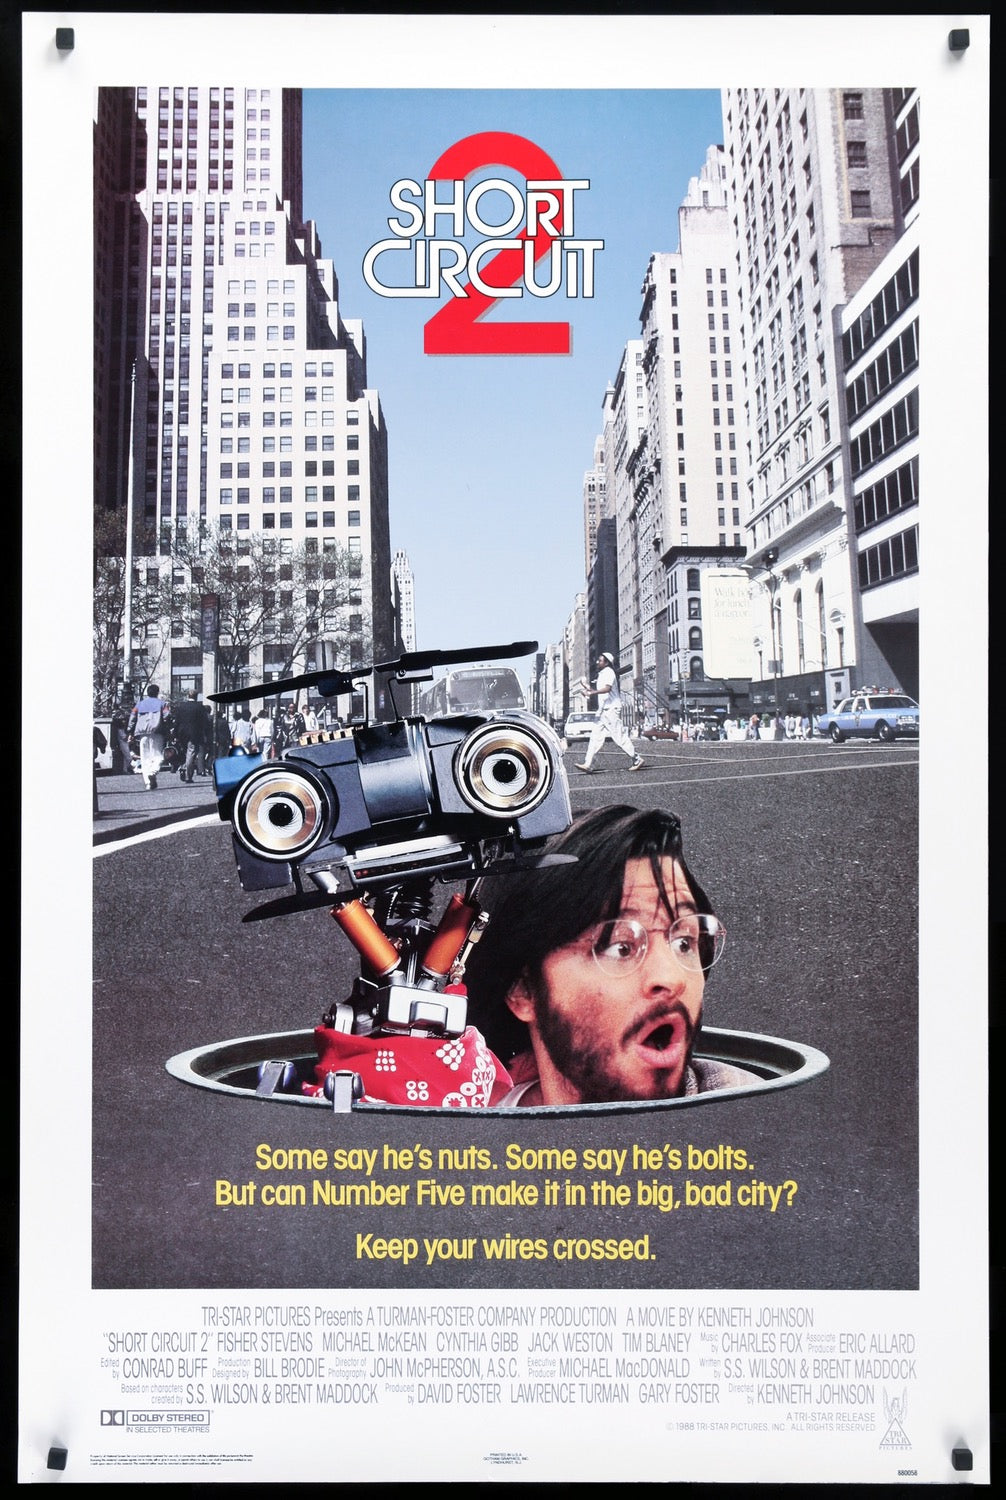 Short Circuit (DVD, 1985) for sale online